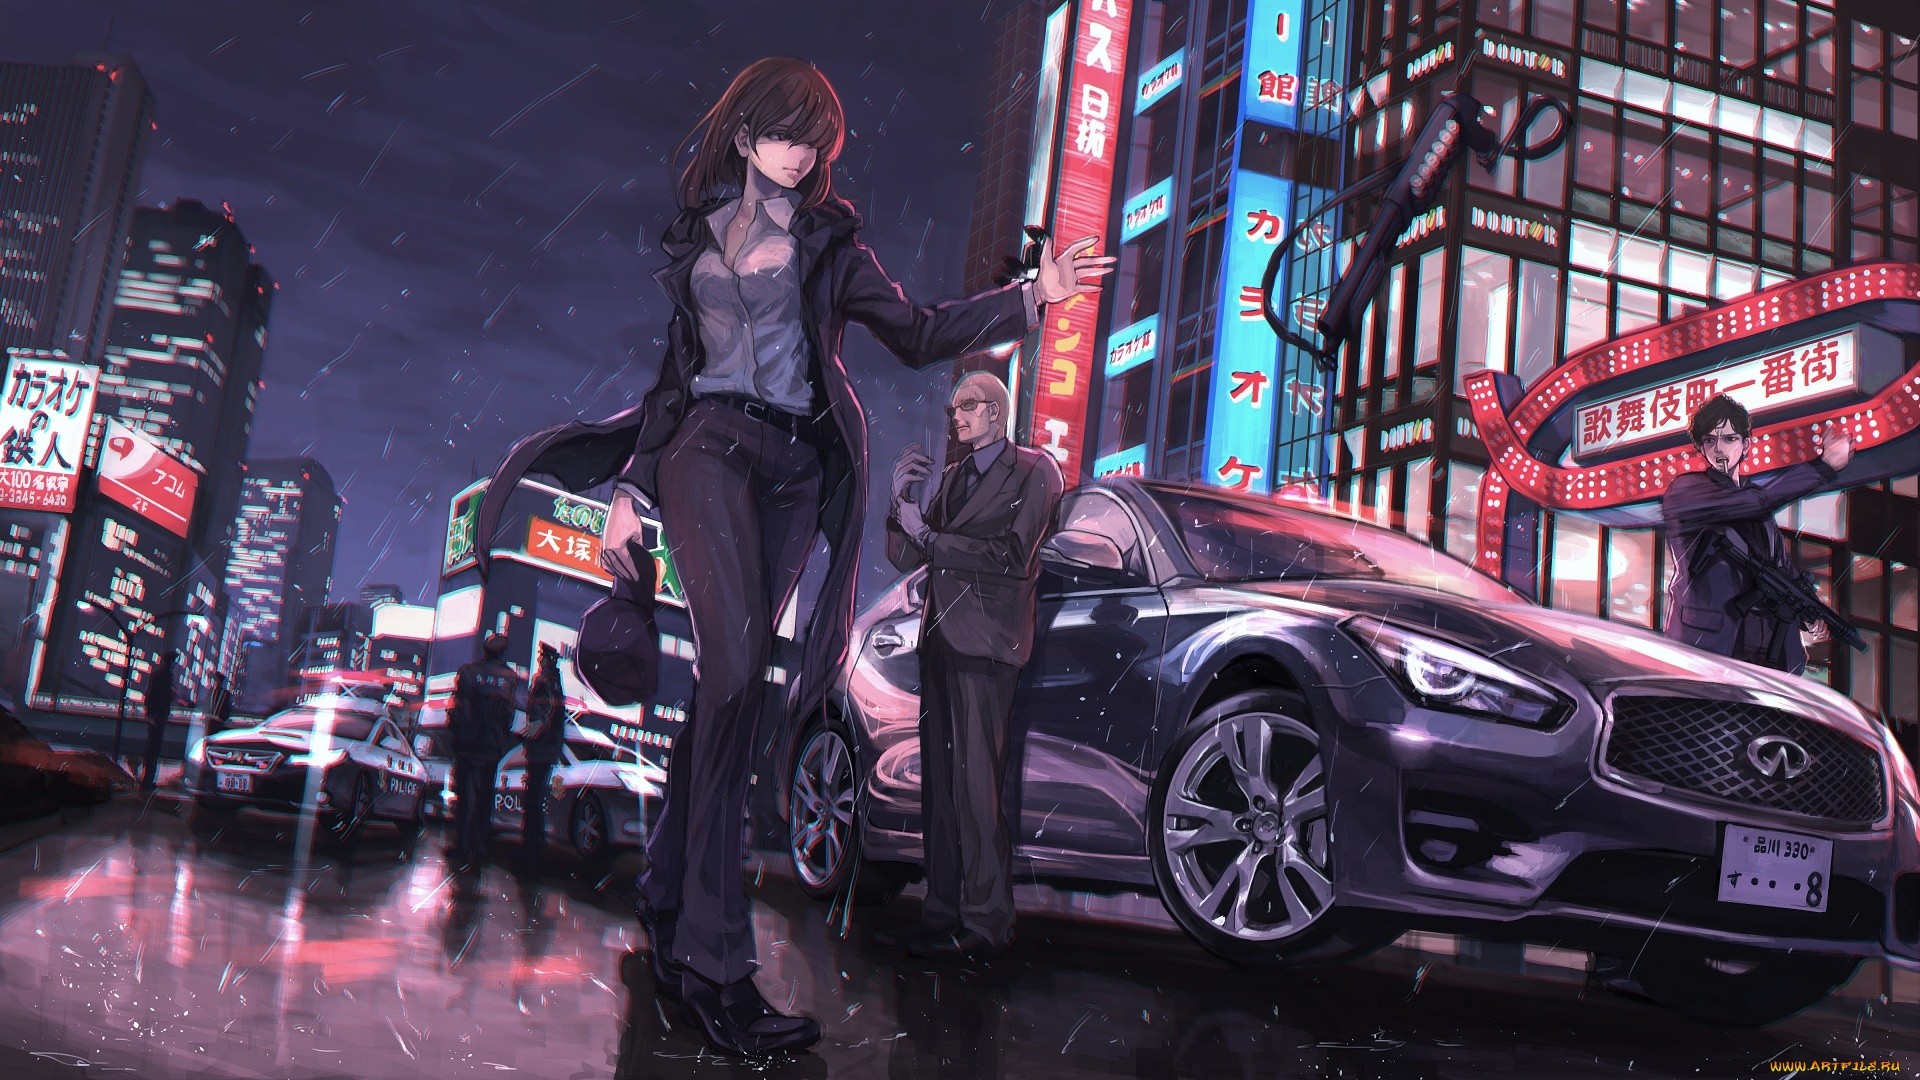 Anime Girl With Car Wallpaper Desktop